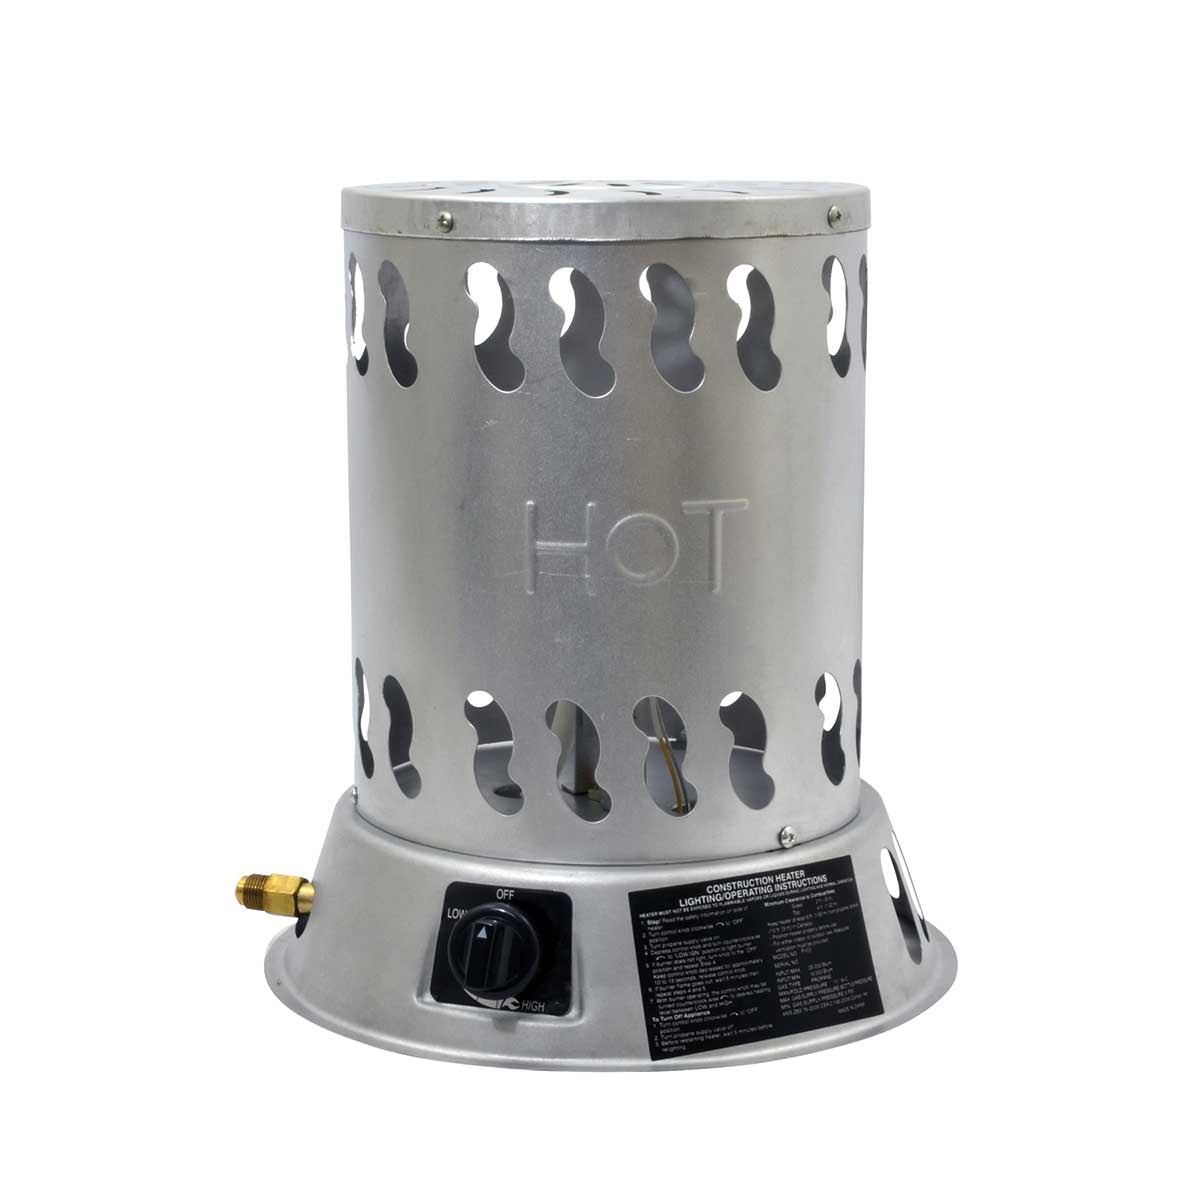 Mr. Heater Convection Propane Portable Heater